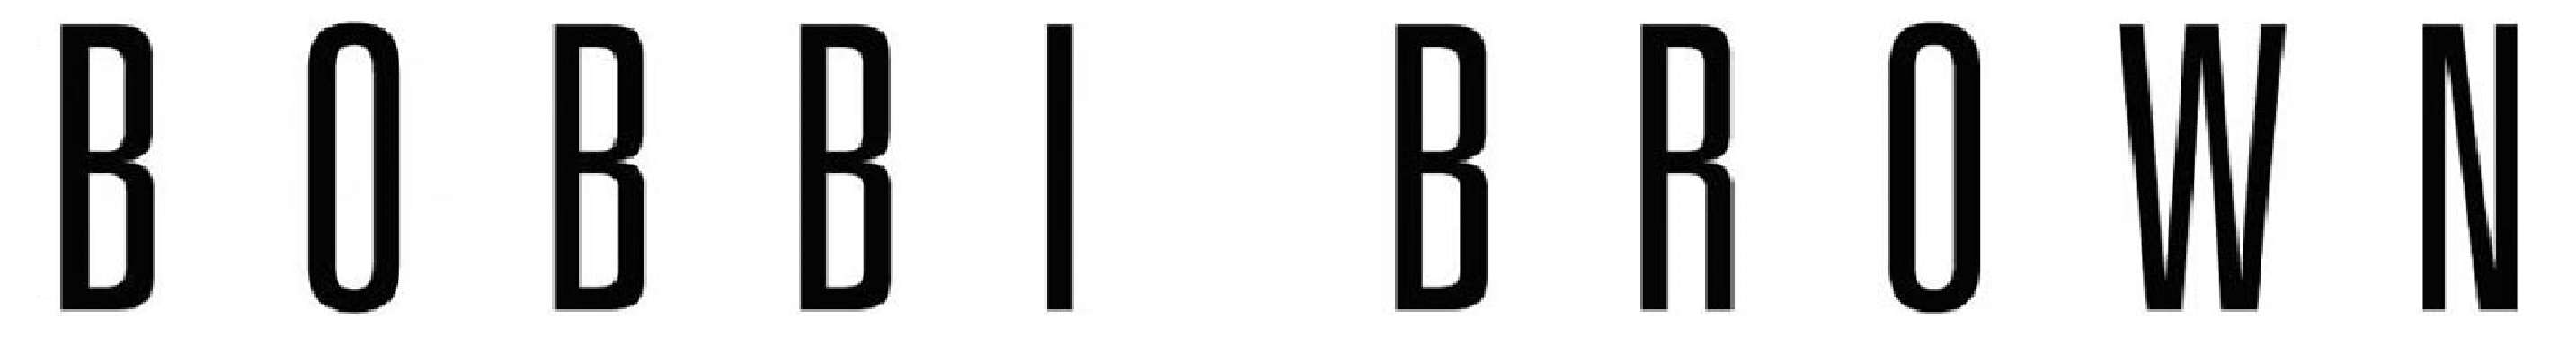 Image result for bobbi brown cosmetics logo